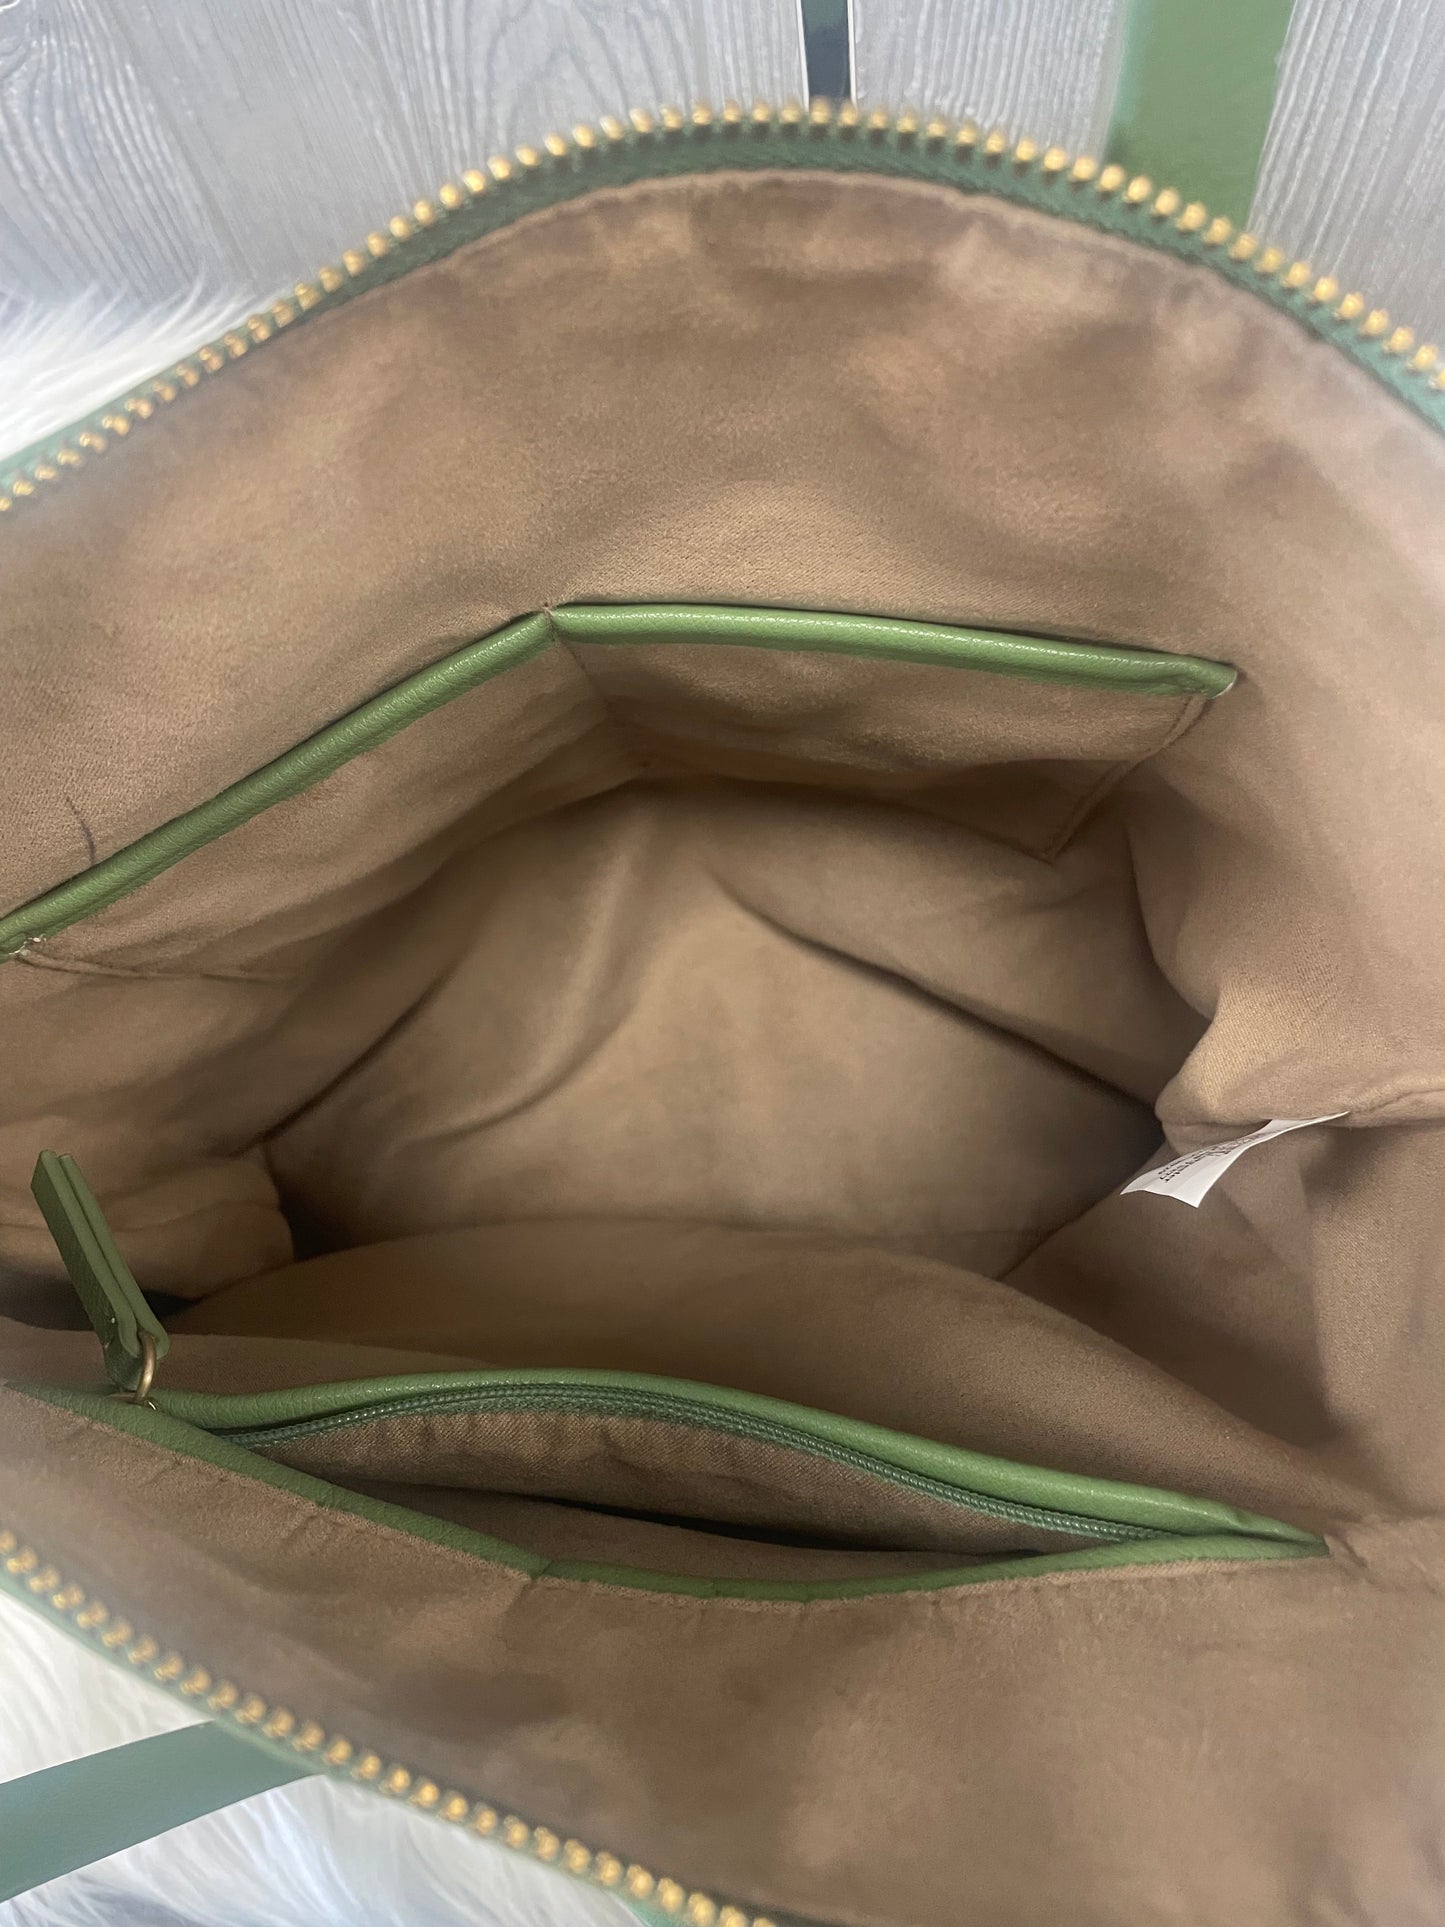 Handbag By Elizabeth And James  Size: Medium